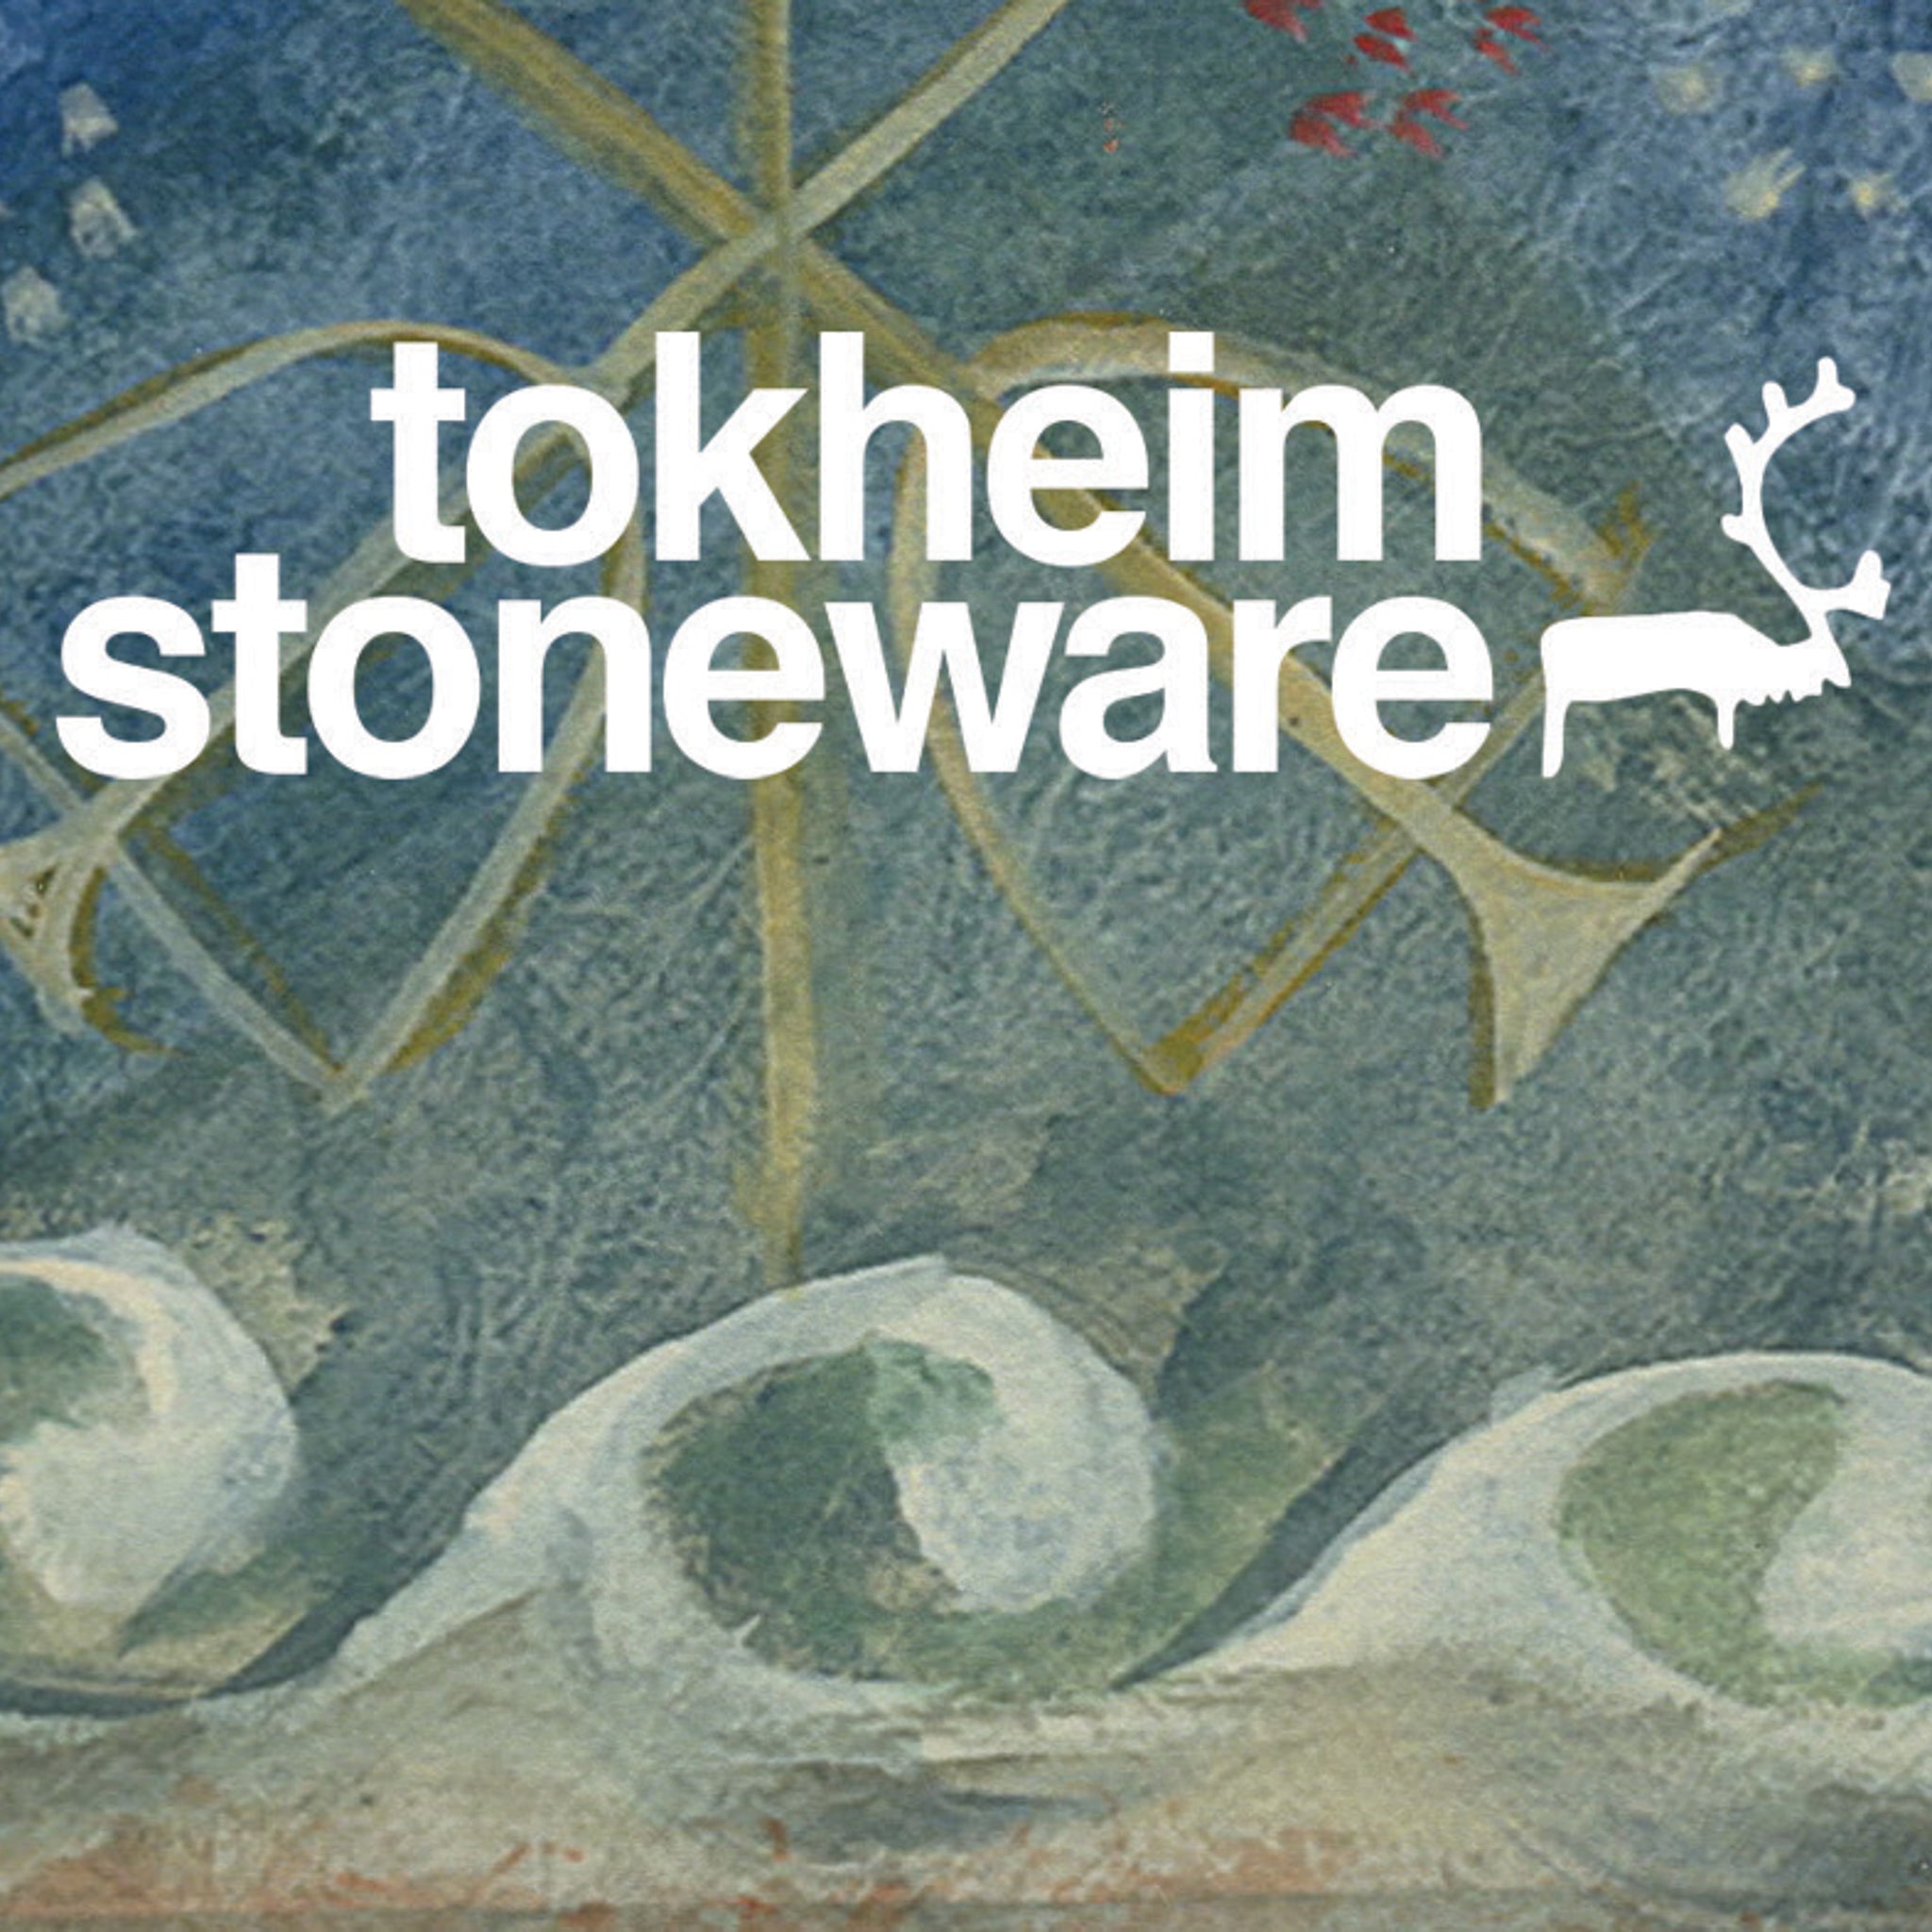 Tokheim Stoneware Gift Card